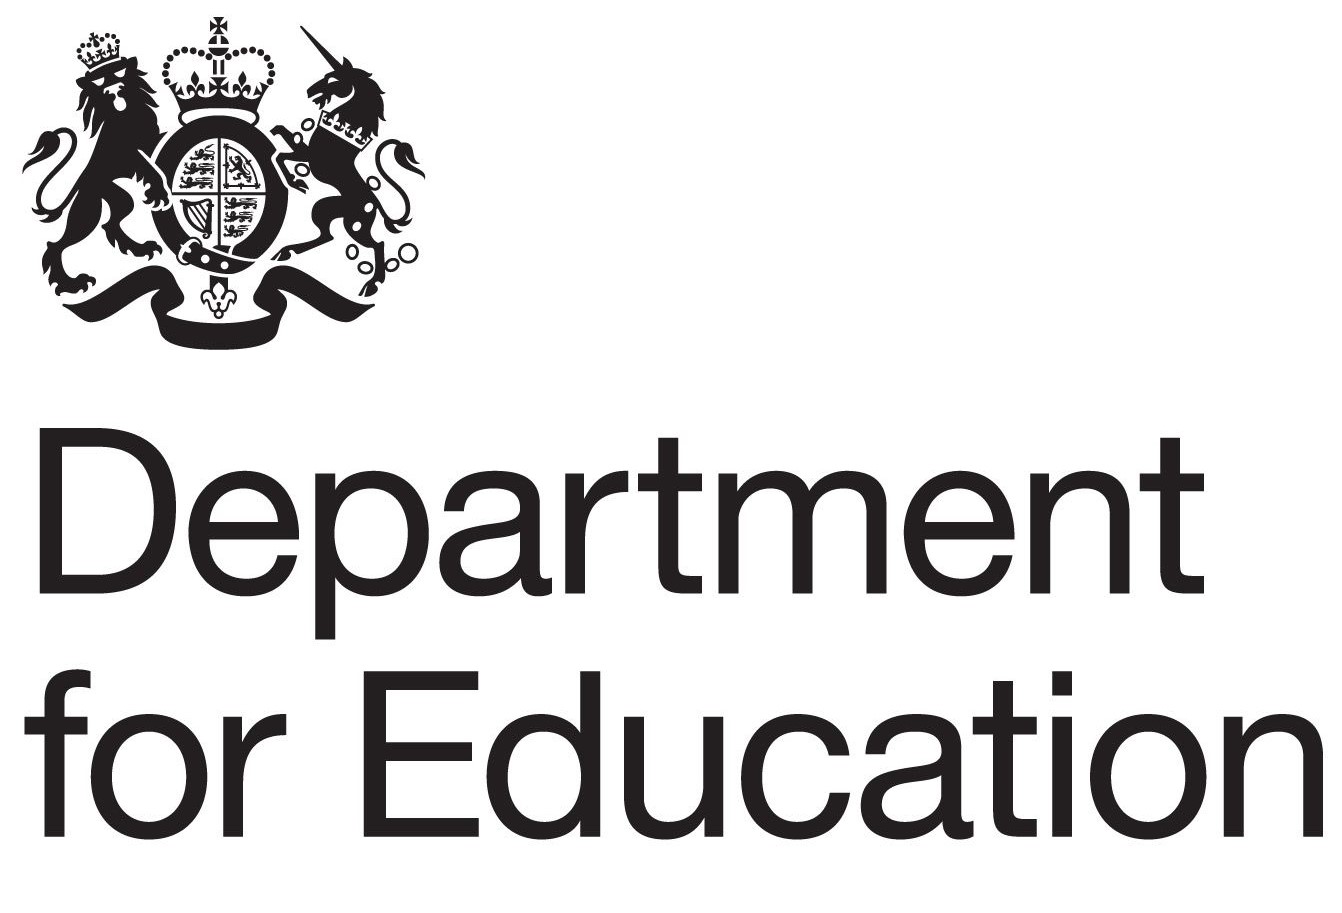 Department of Education logo